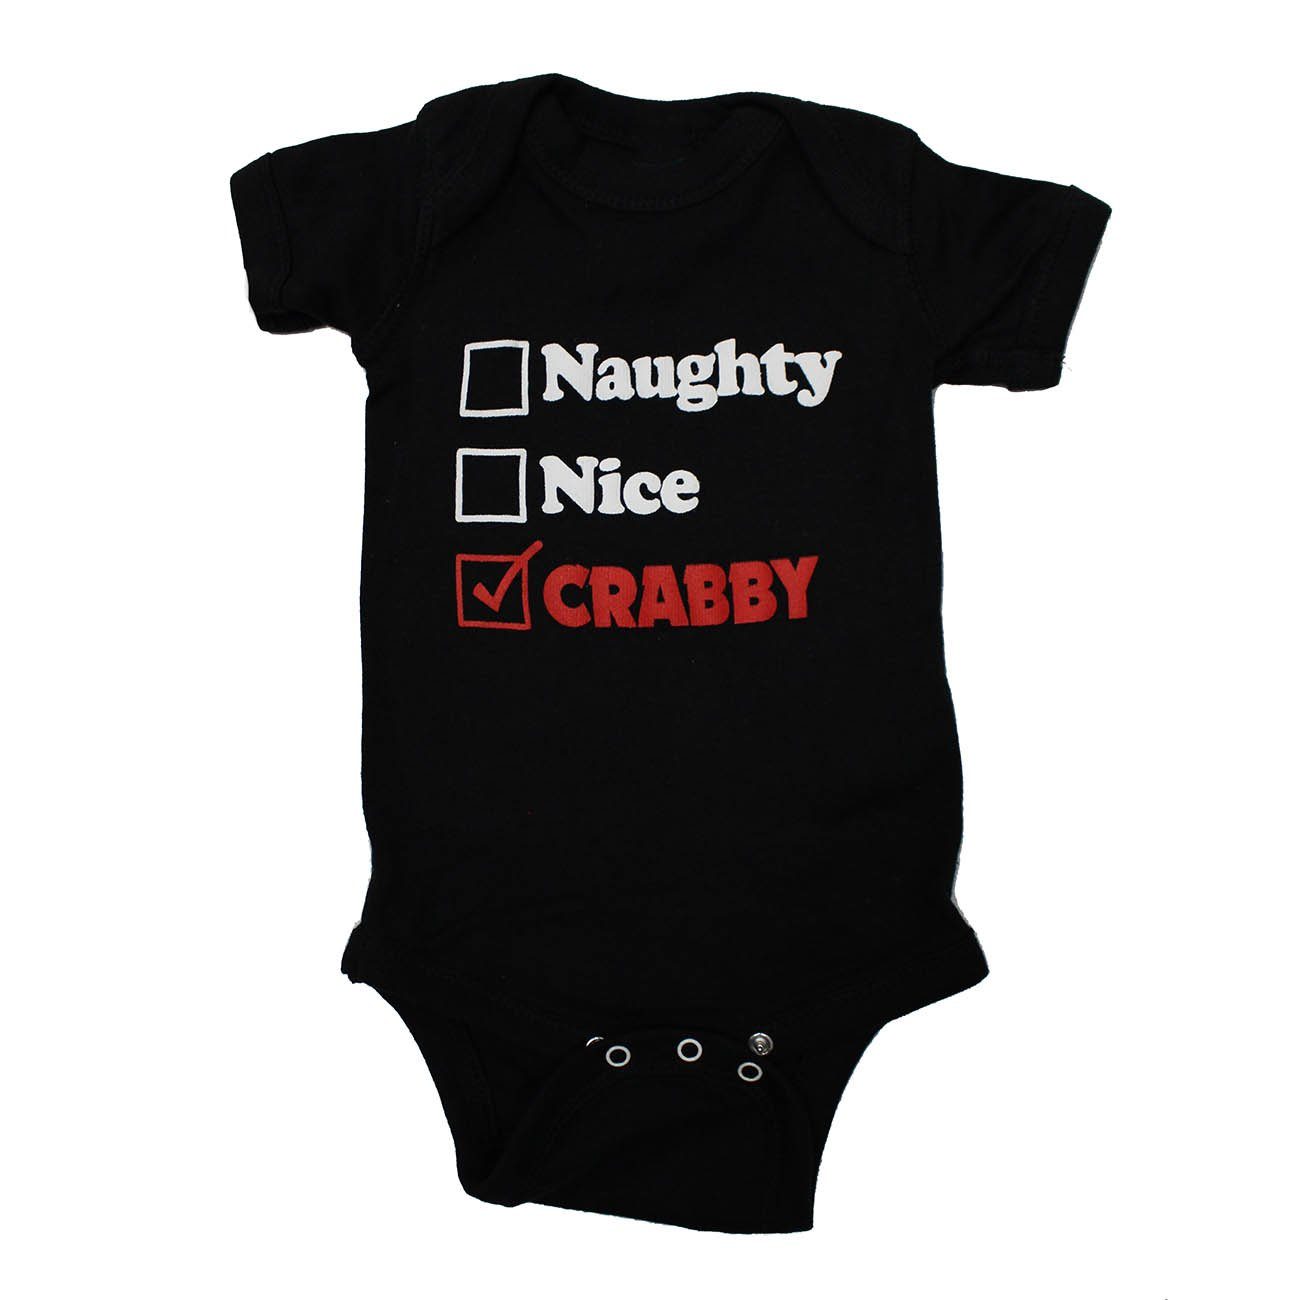 Naughty, Nice, Crabby (Black) / Baby Onesie - Route One Apparel